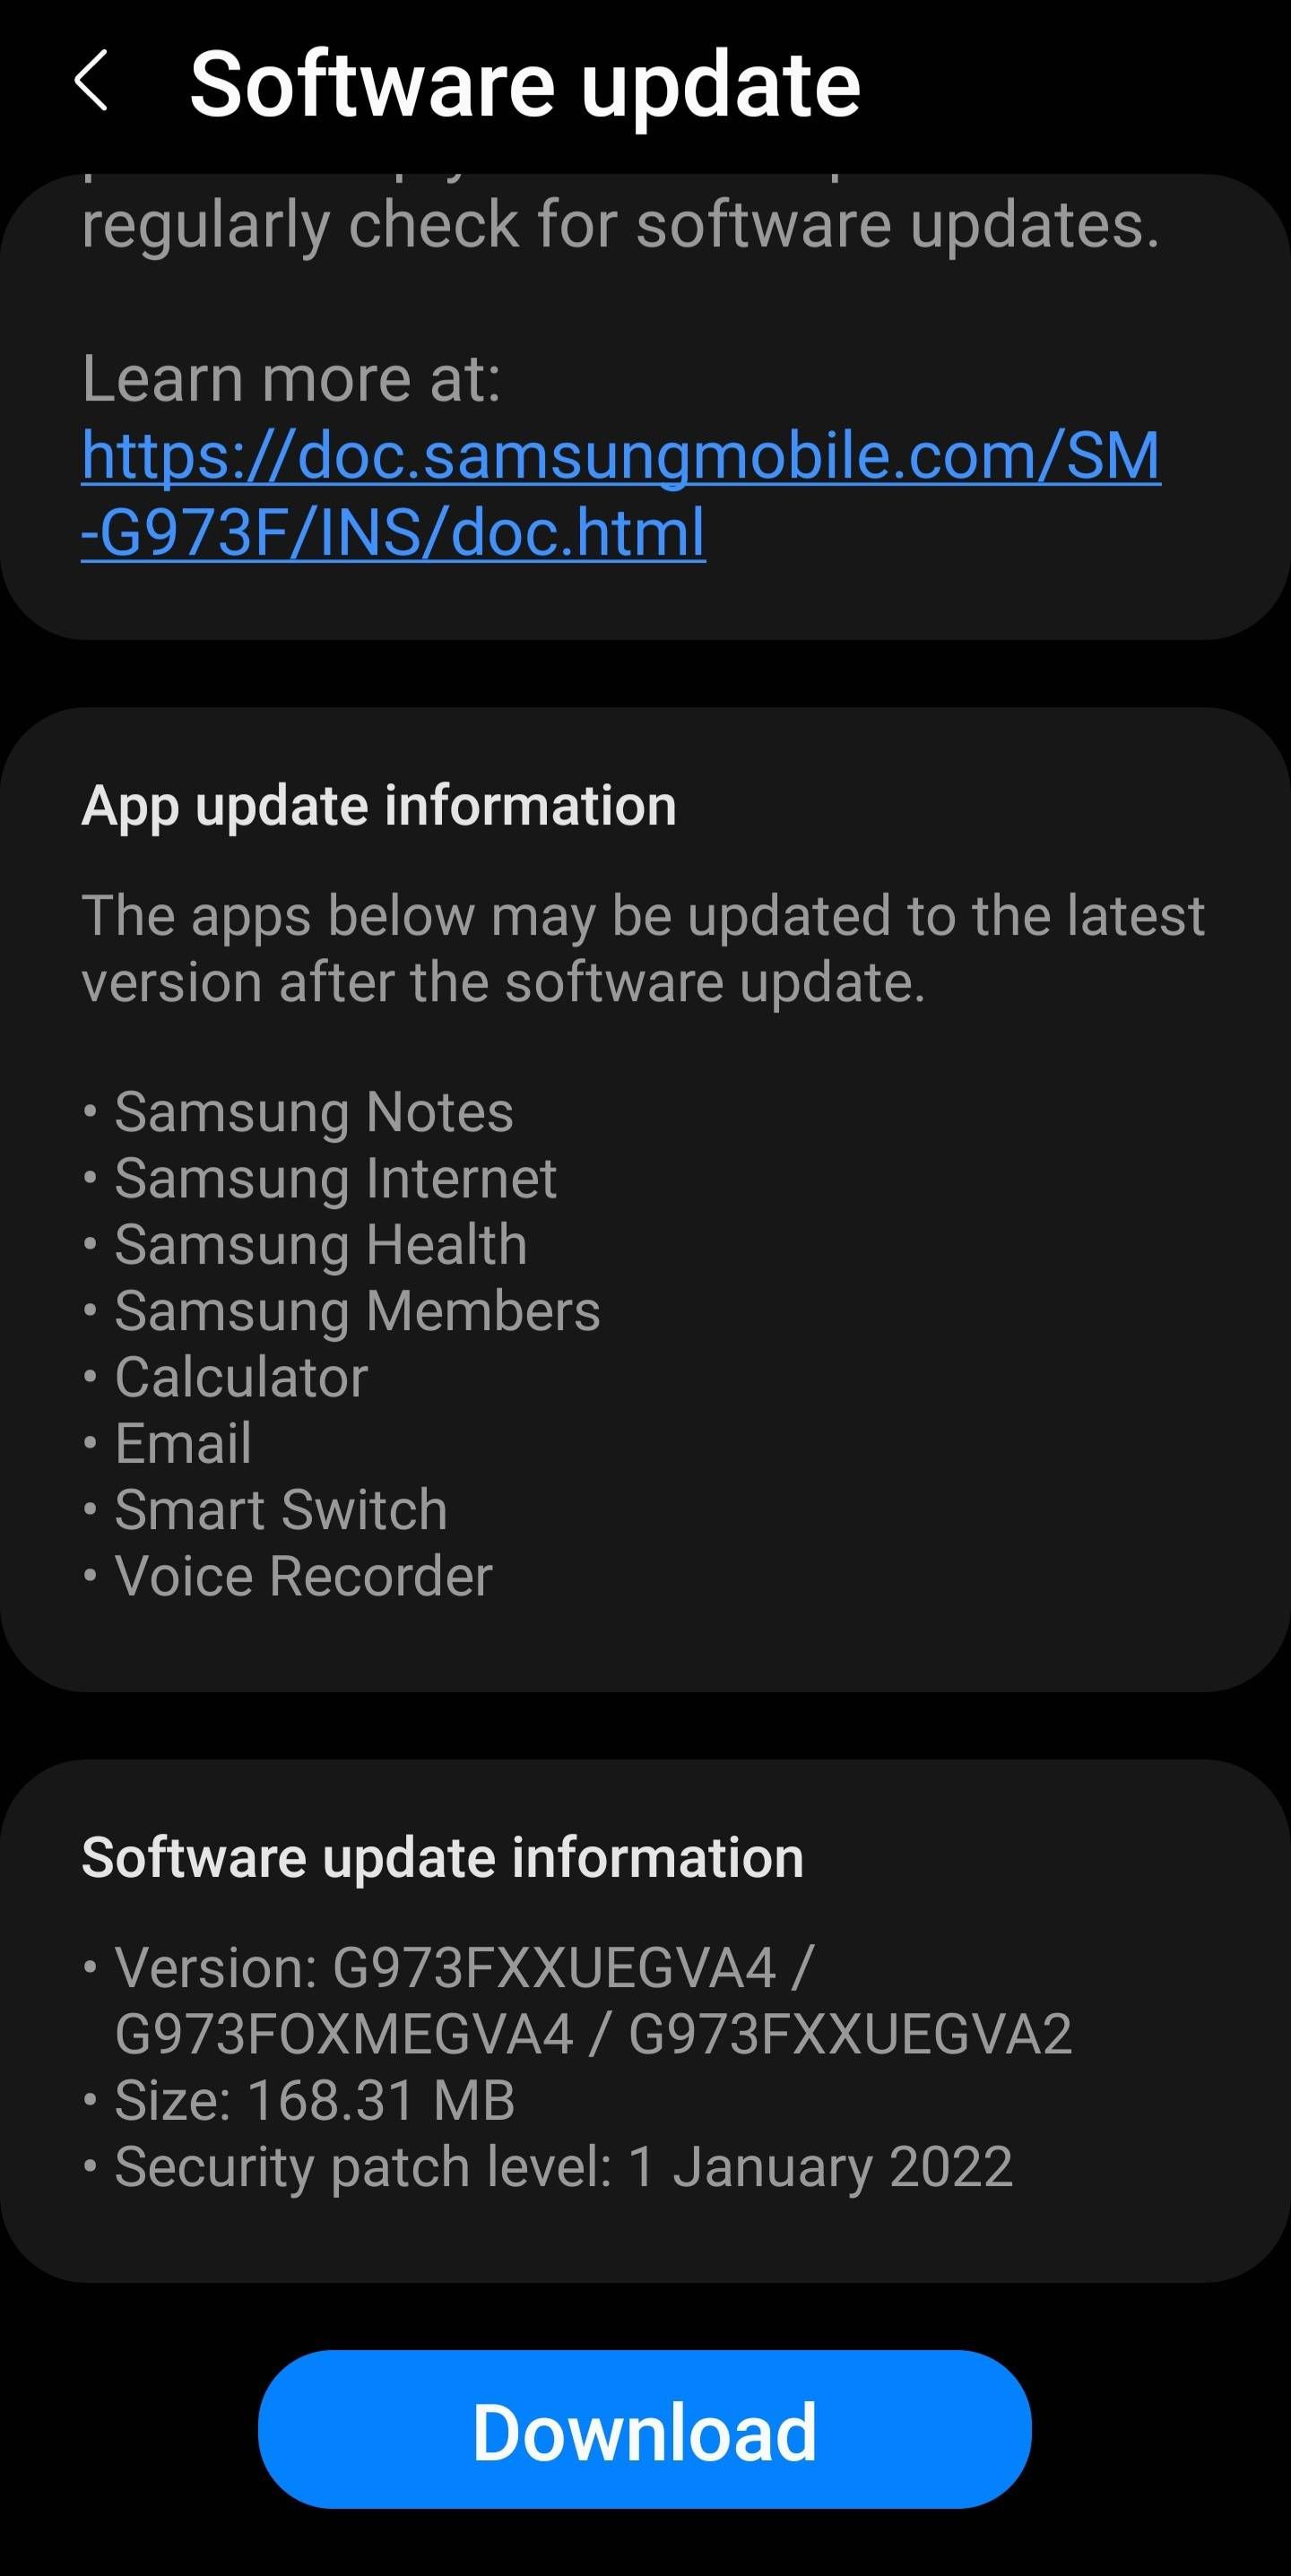 Samsung S10 got January security update - Samsung Members